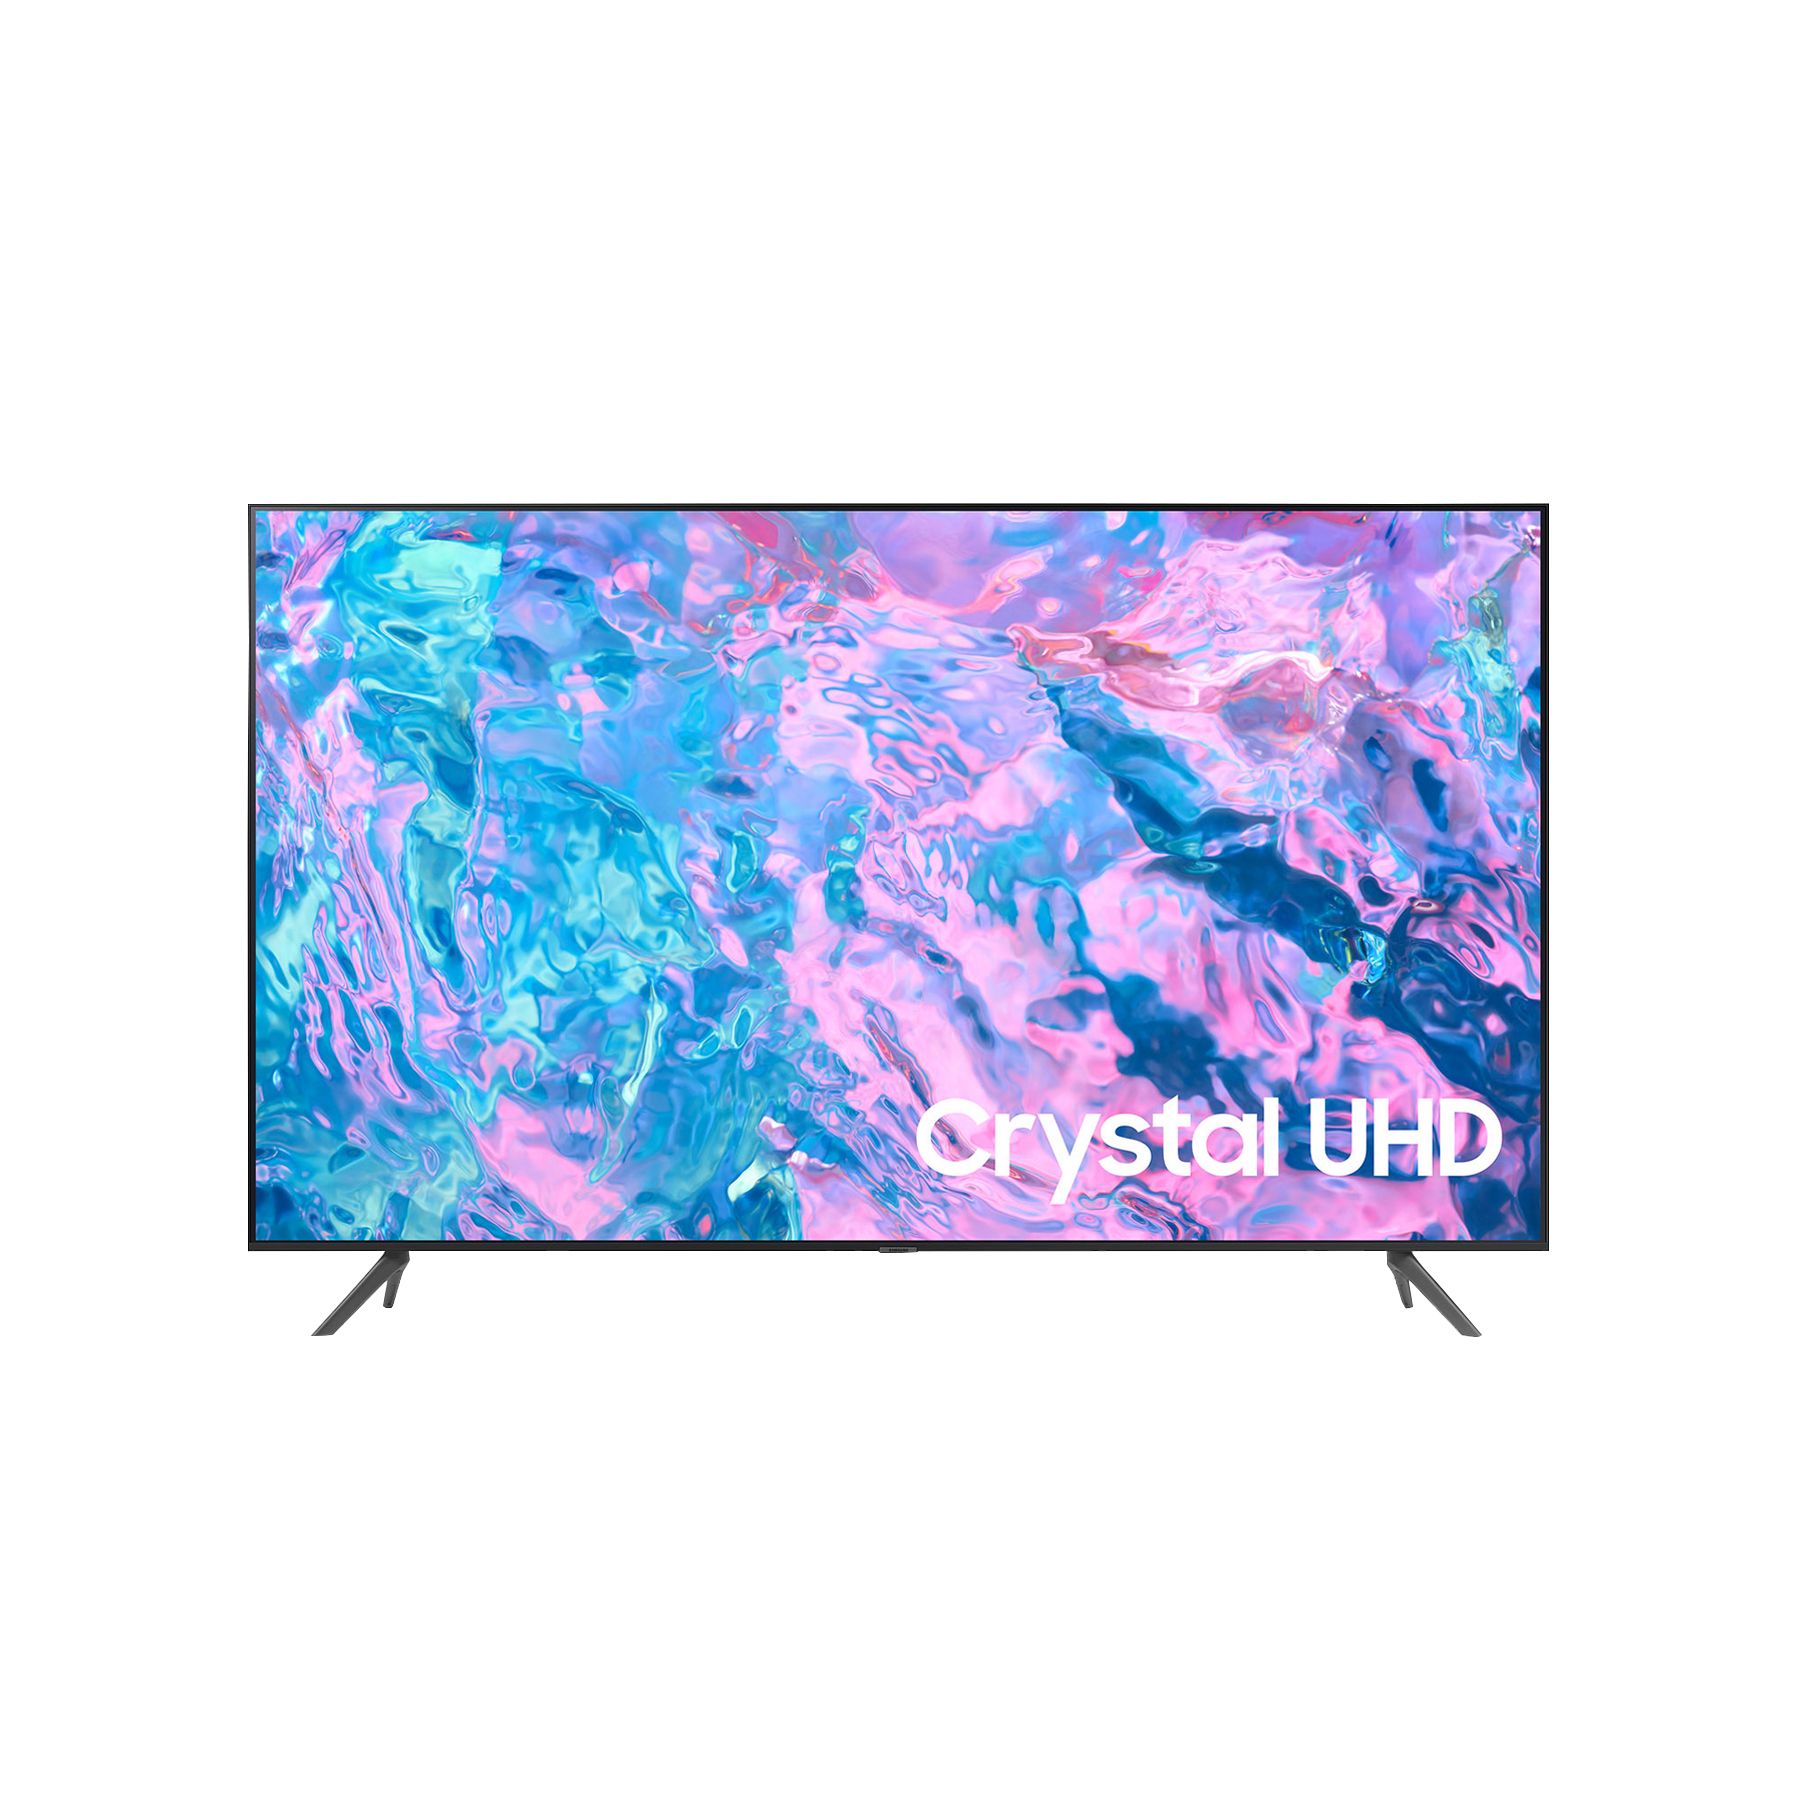 Pantalla LG 50 Pulgadas Smart TV UHD 4K AI ThinQ 50UQ8000PSB